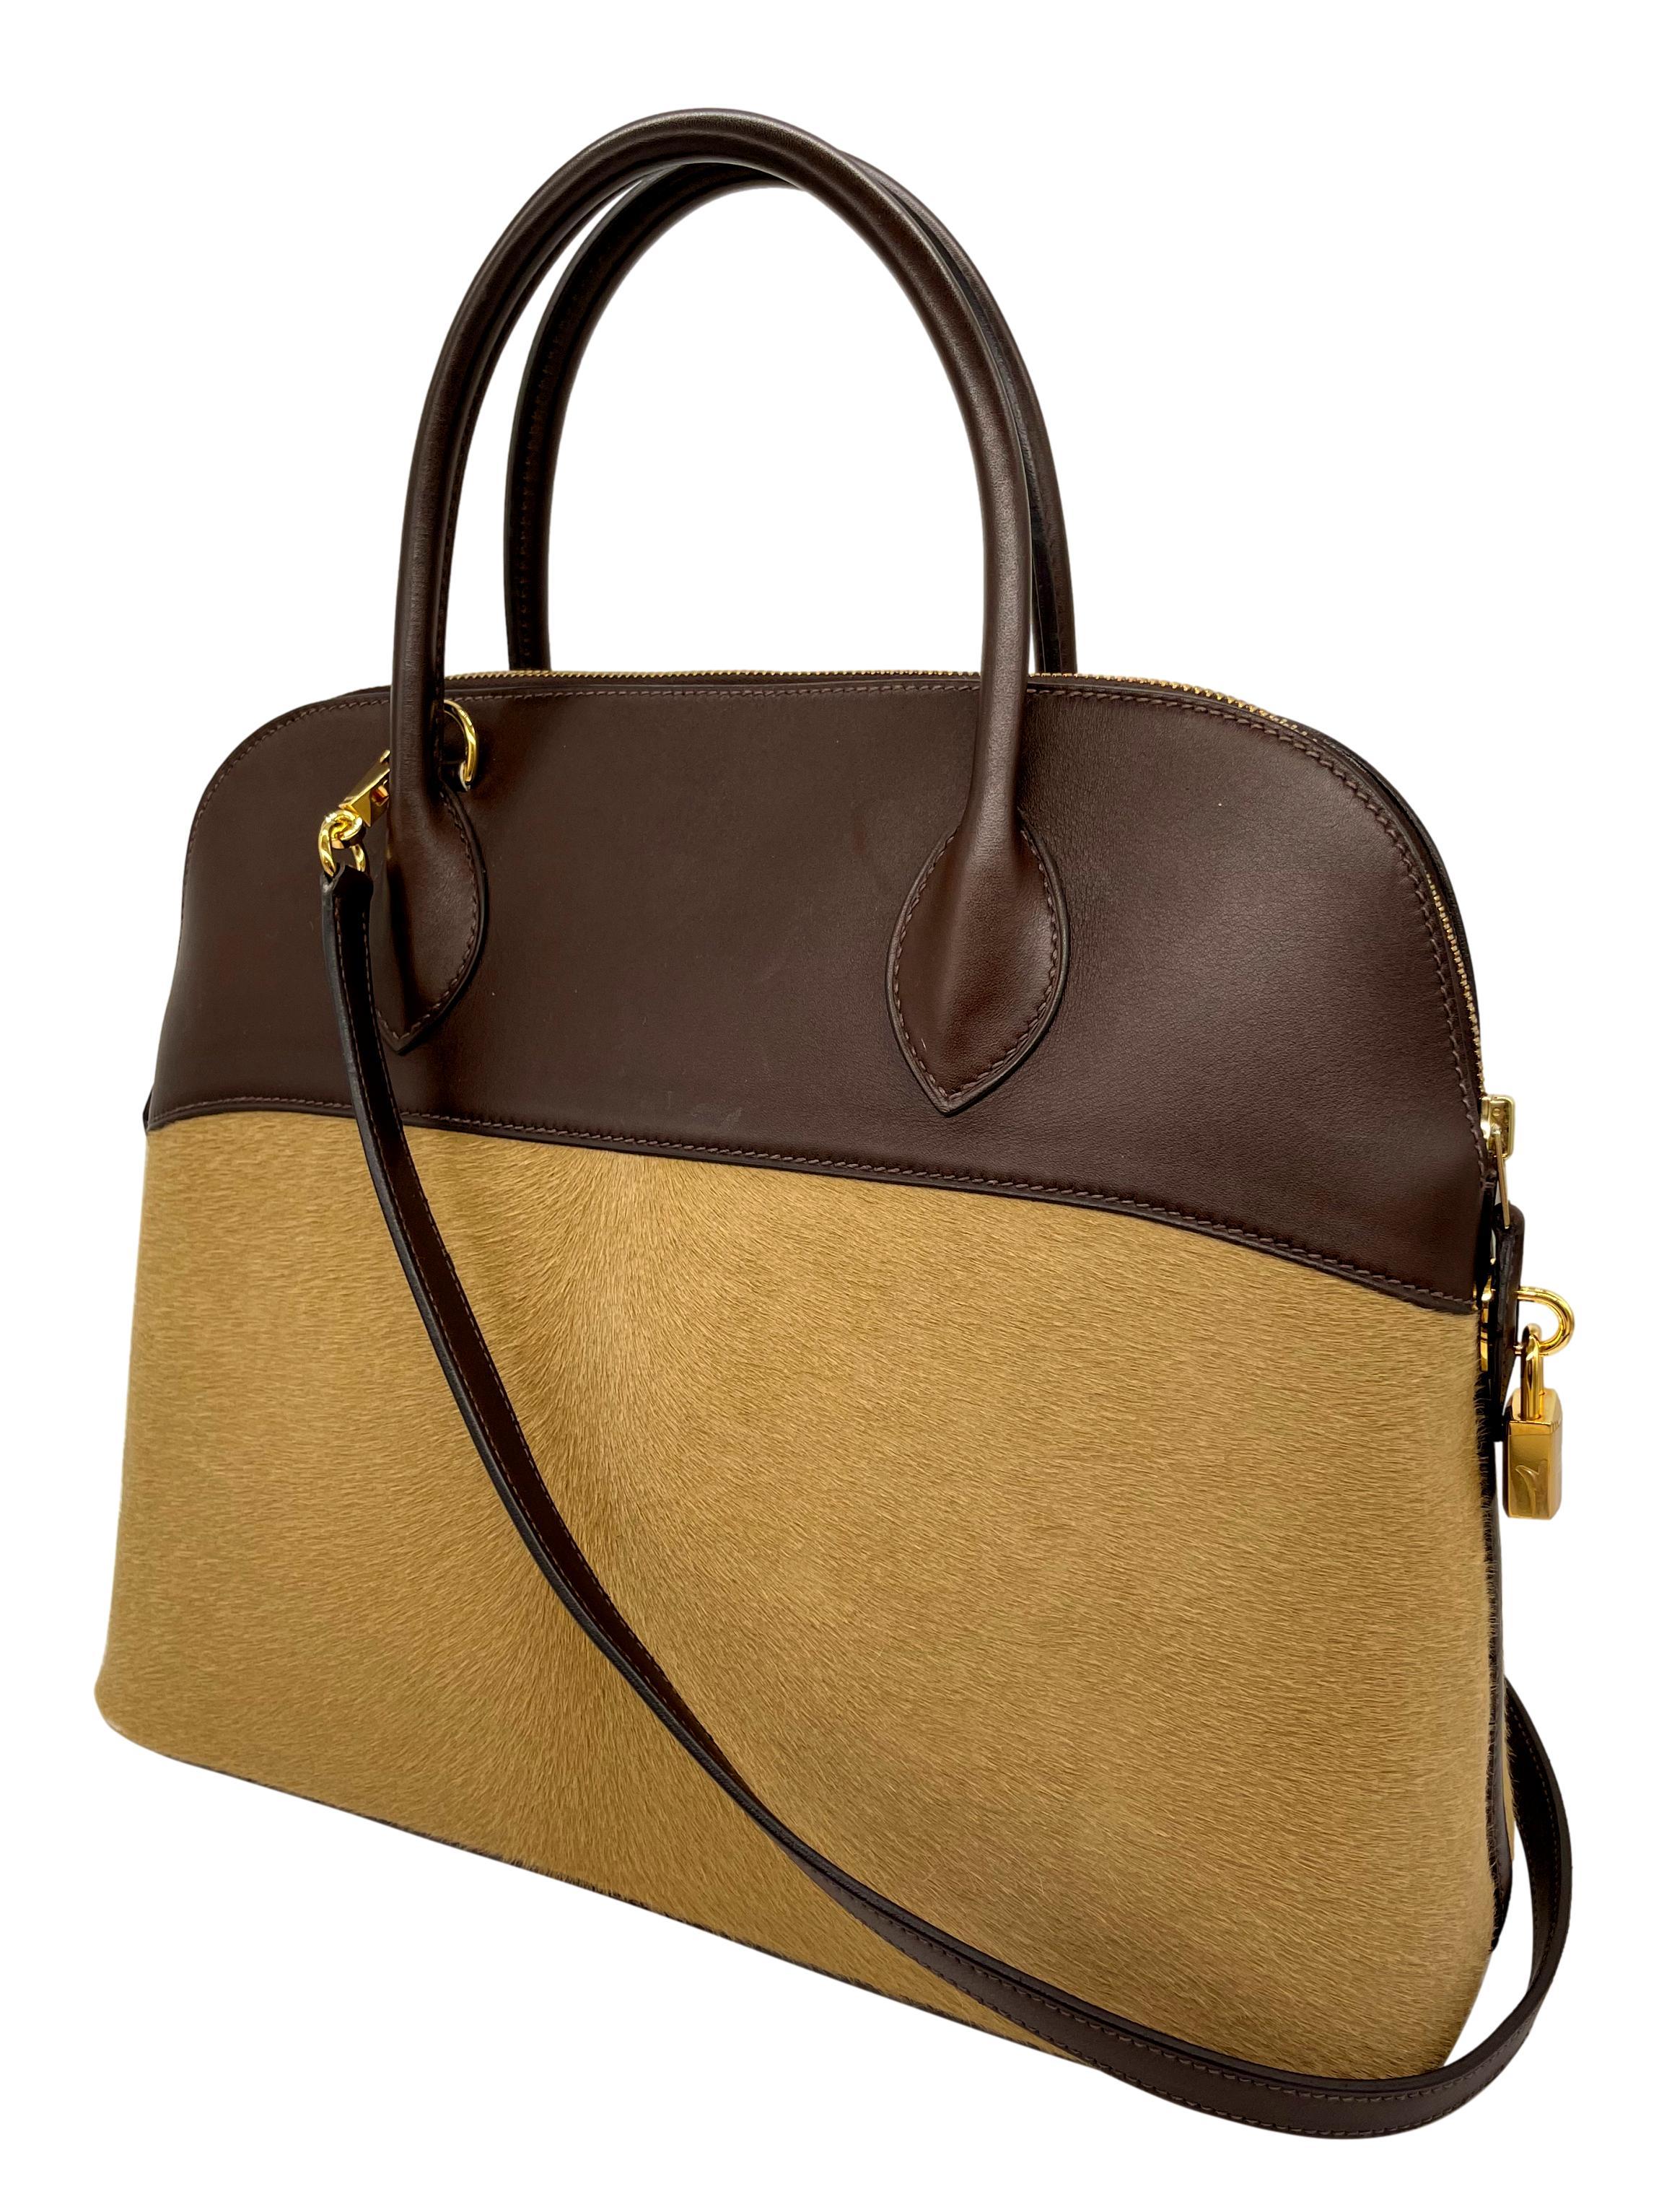 Brown Hermès Limited Edition Ébene Evercalf & Troika Ponyhair Bolide Bag 35cm, 2007.